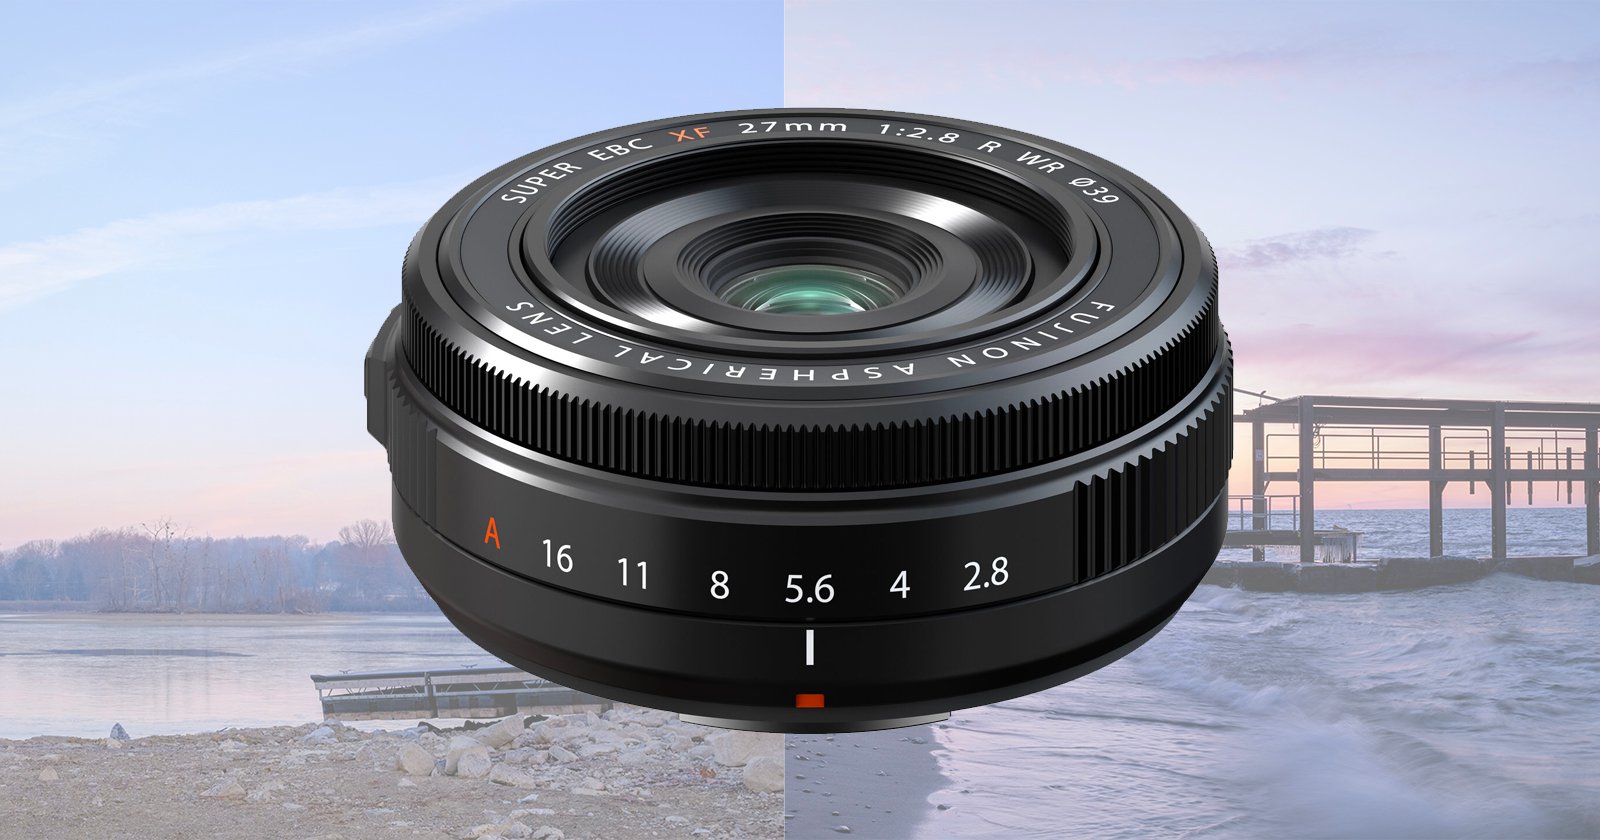 Hijsen Op tijd Whirlpool First Impressions of the Fujifilm XF 27mm f/2.8 Pancake Lens | PetaPixel